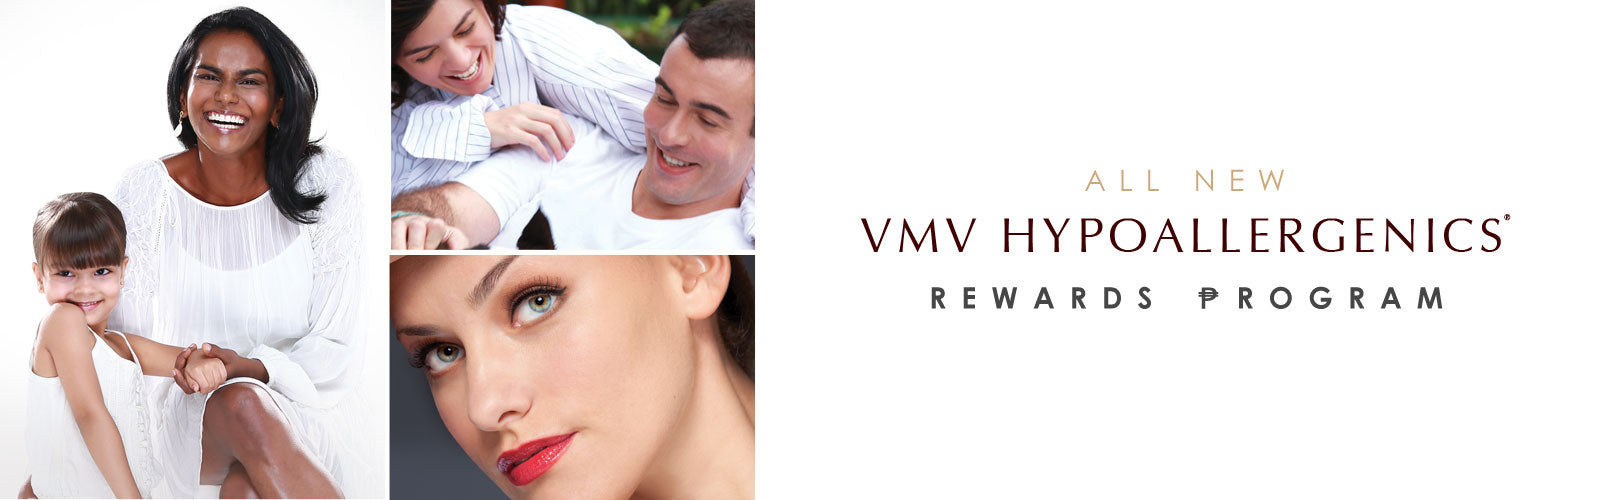 VMV Rewards ₱rogram